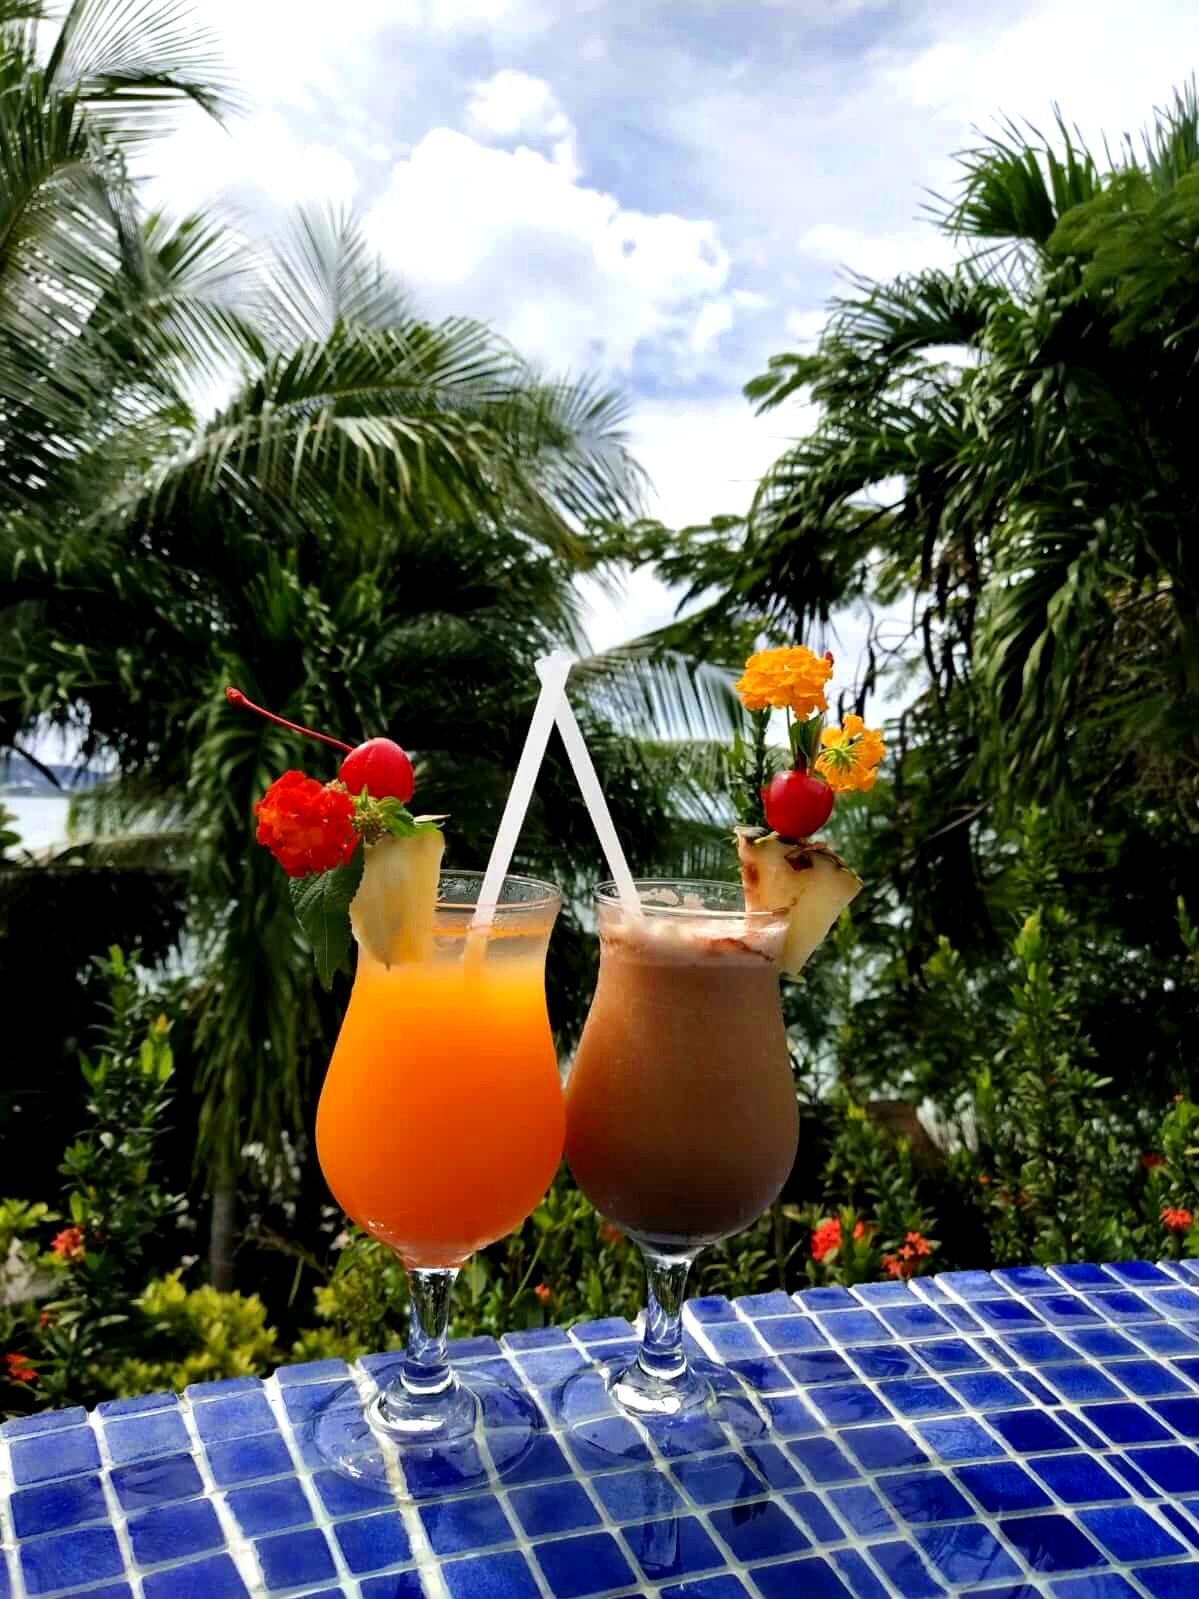 Calabash Cove St Lucia cocktails